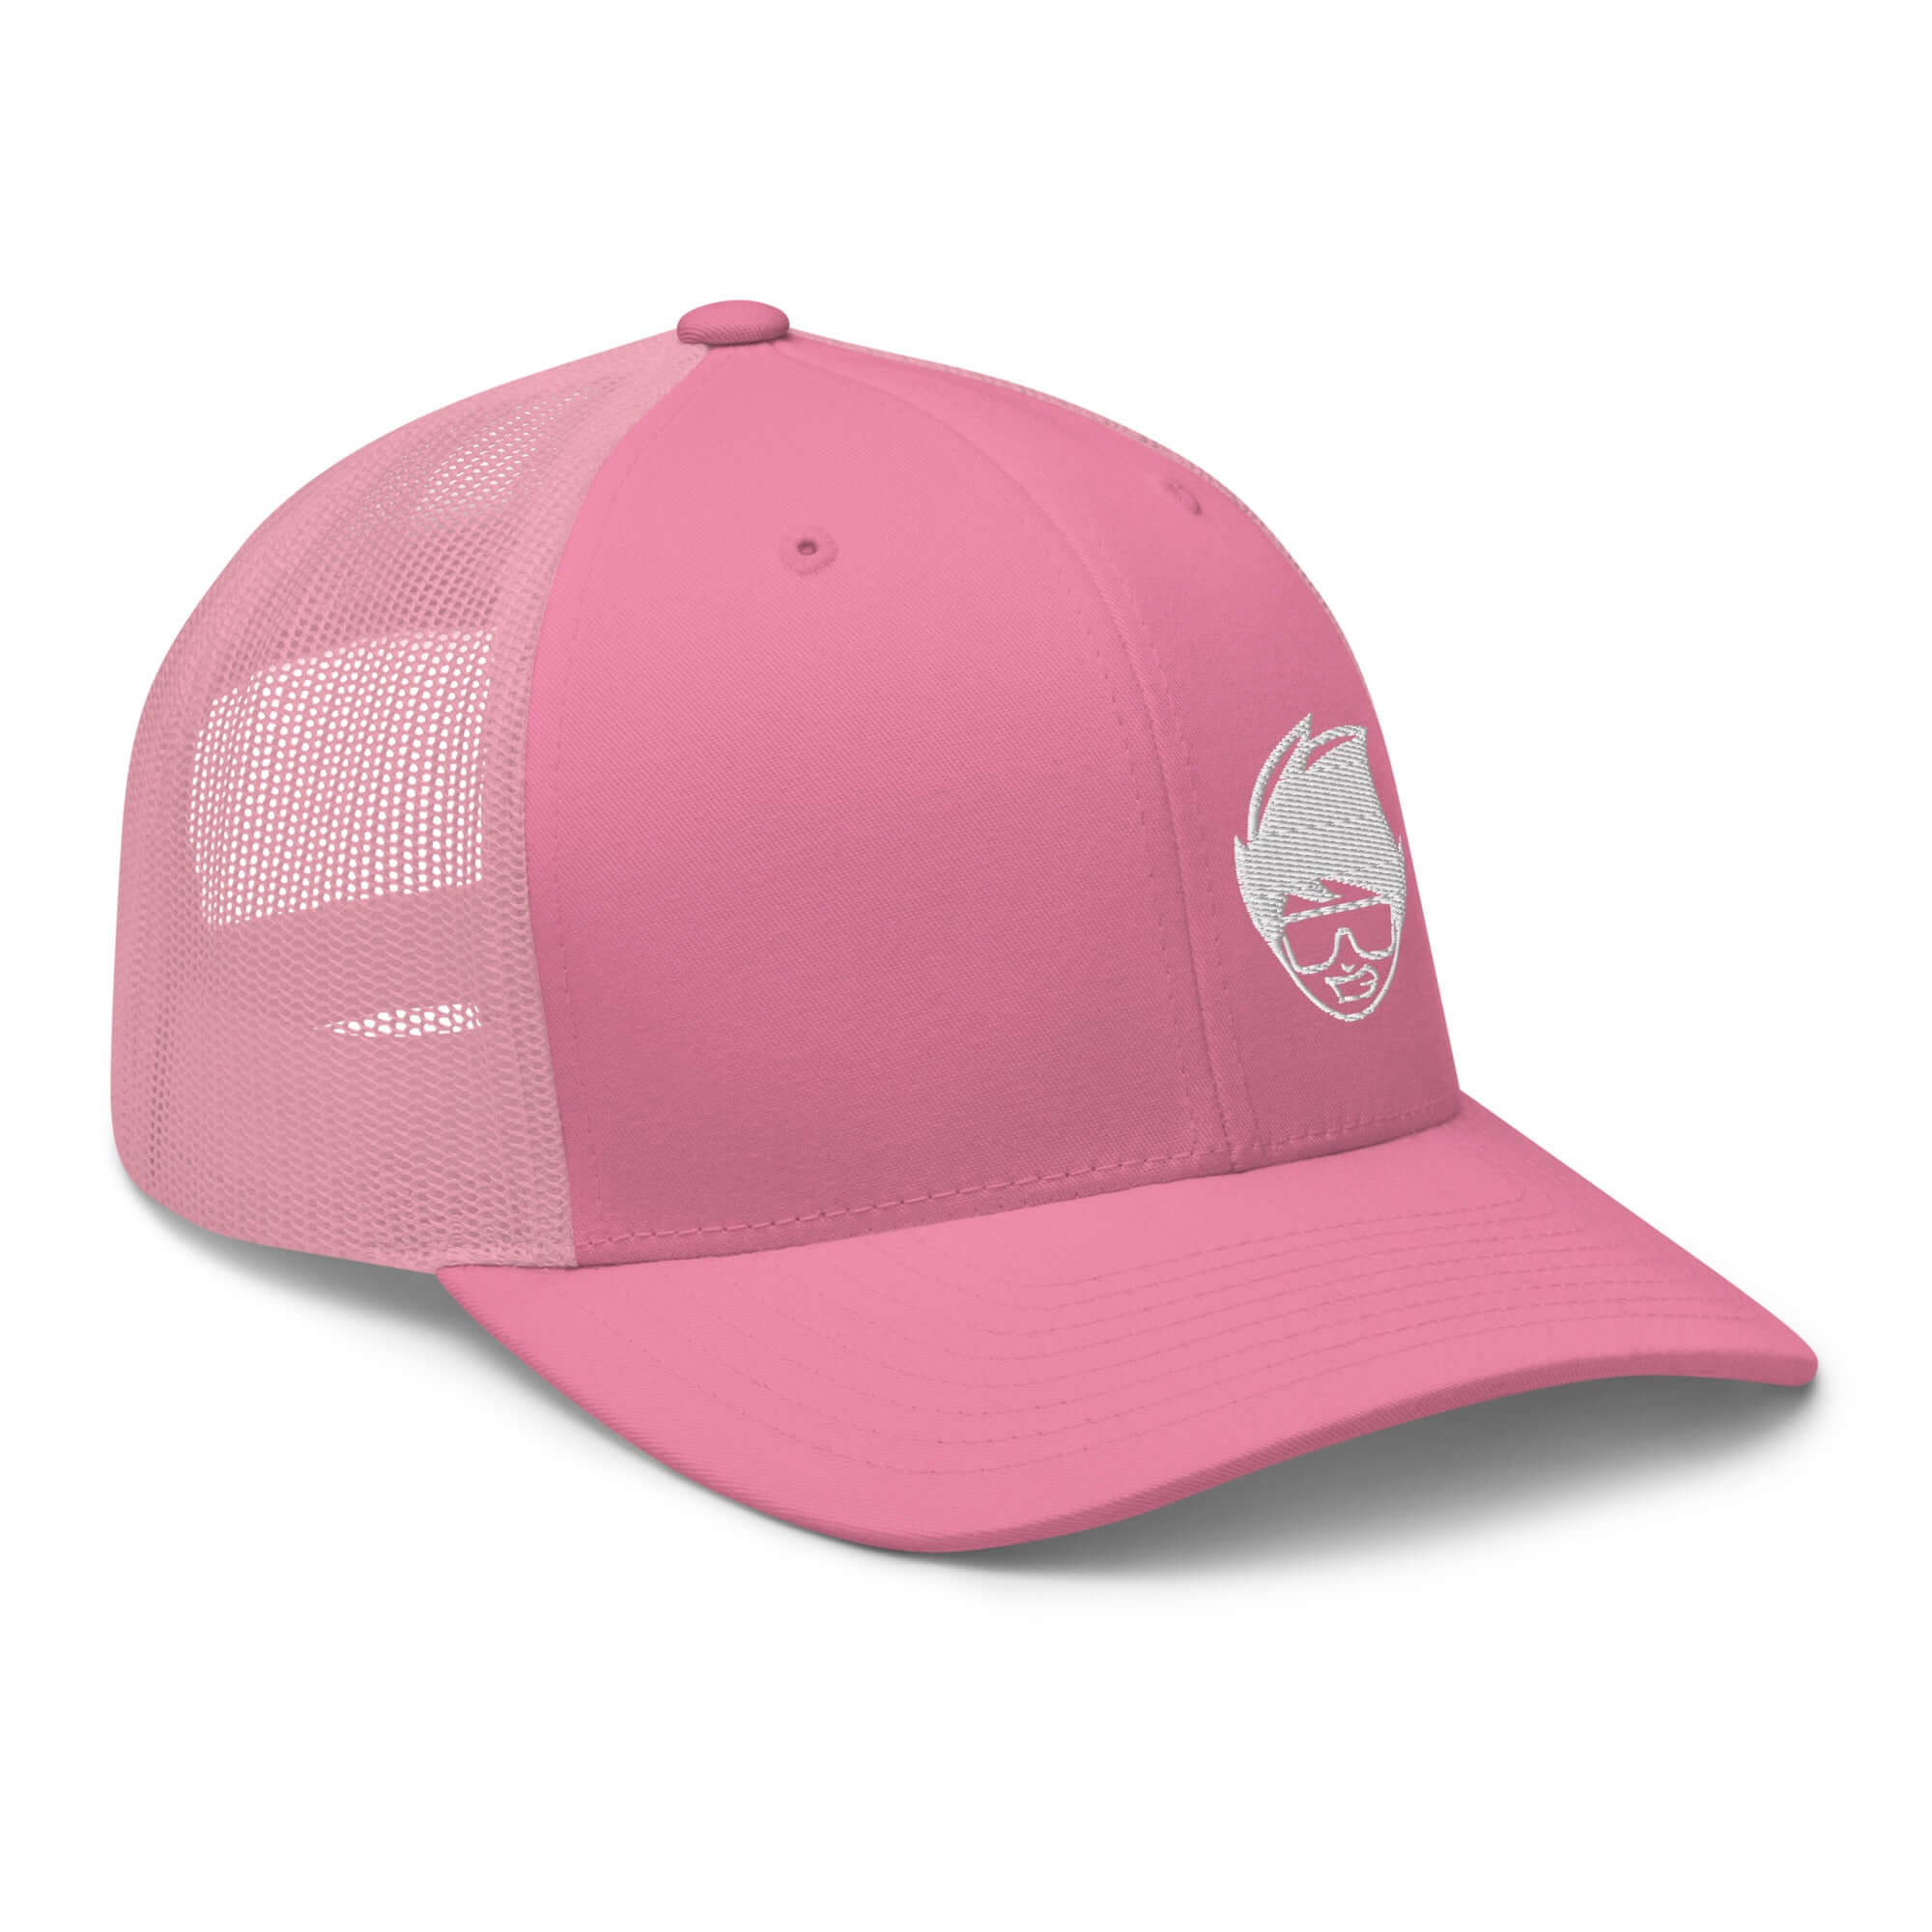 Mac The Trucker | Fishing Hats | Waxhead Hat Pink